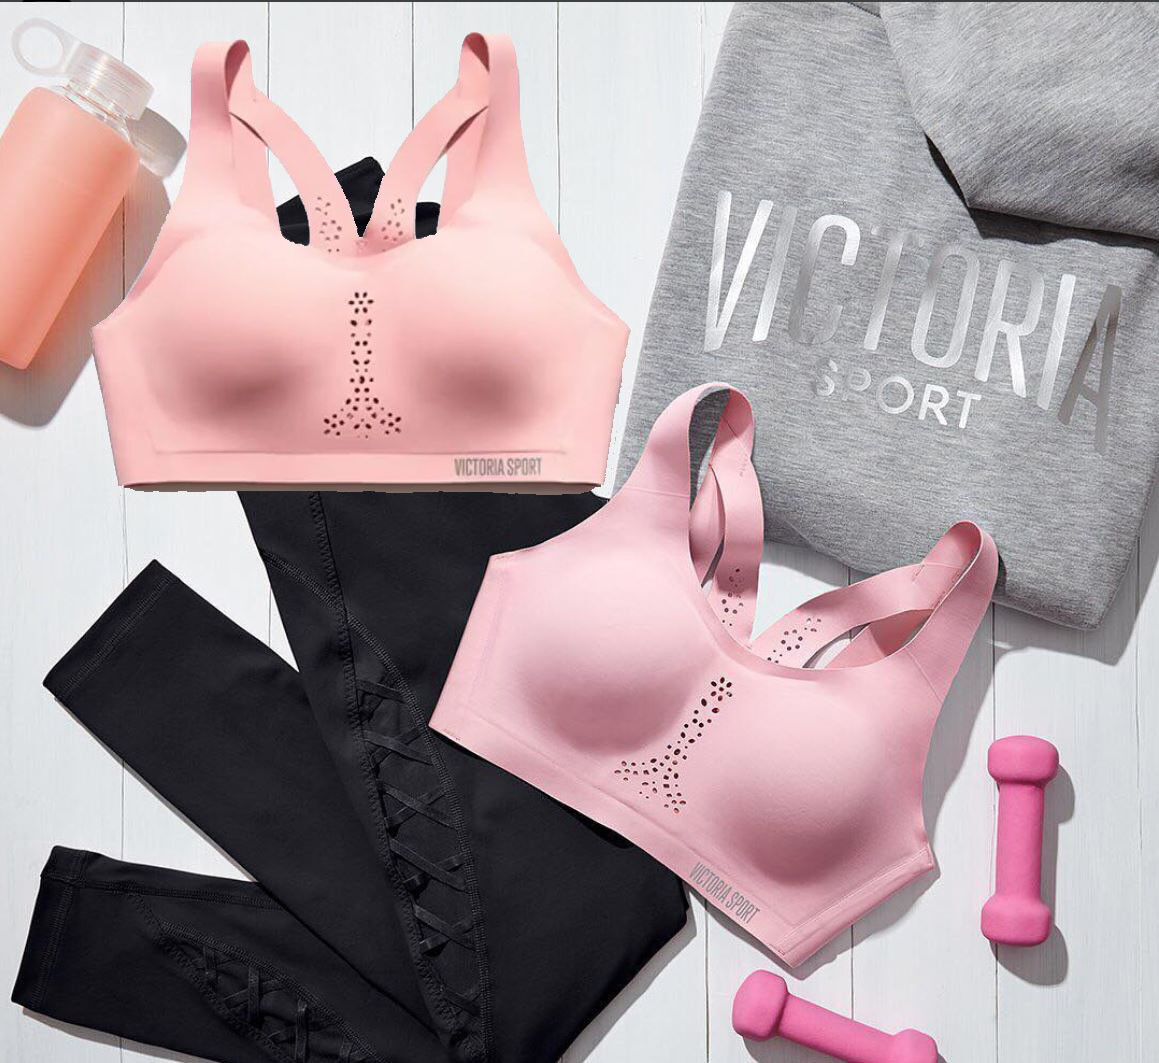 Victoria's Secret PINK Sports Bra Size XS for Sale in Abilene, TX